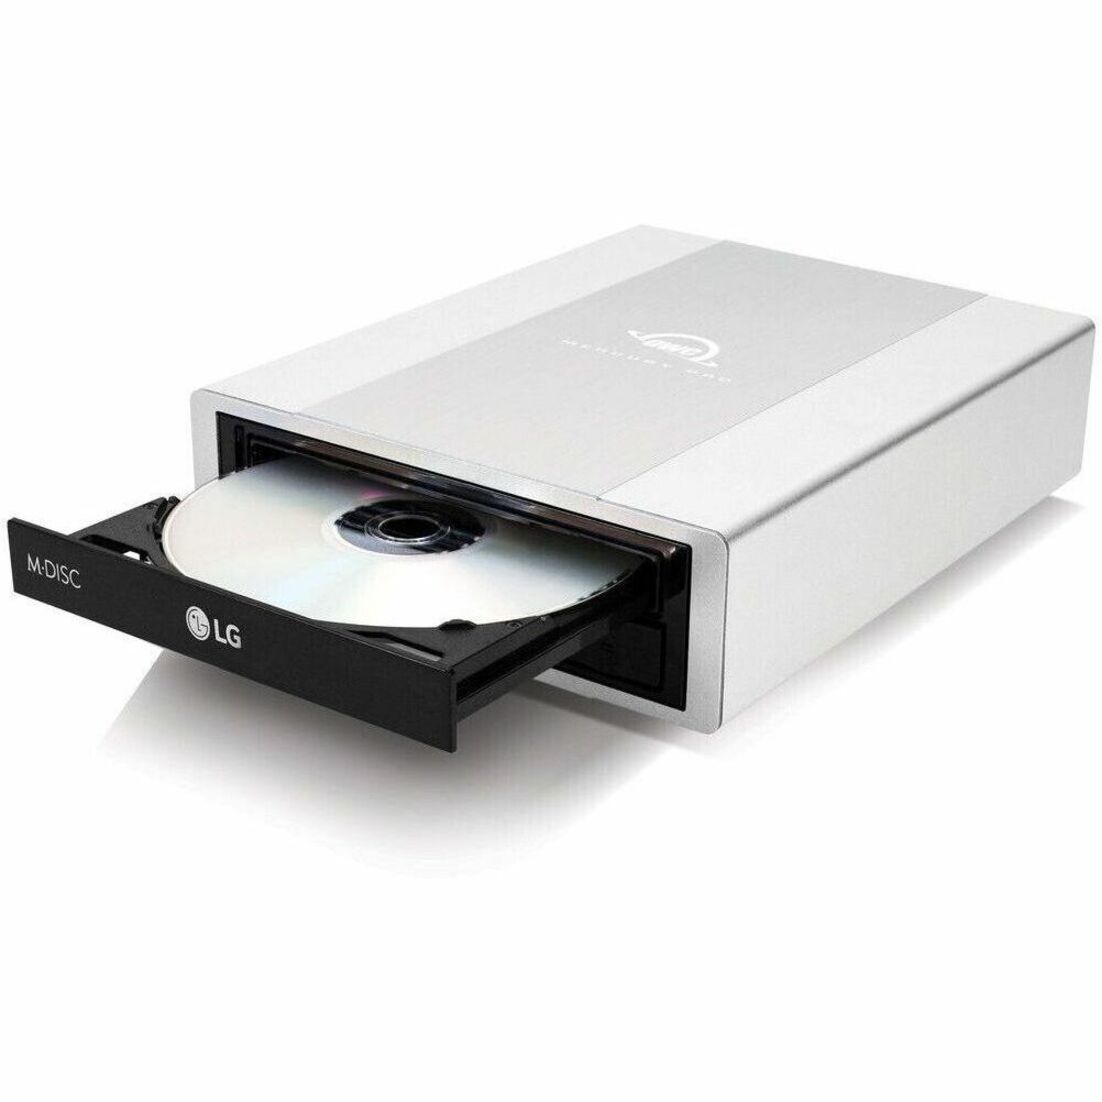 OWC OWCMR3USD24 Mercury Pro DVD-Writer External, USB 3.0, 1 Year Warranty